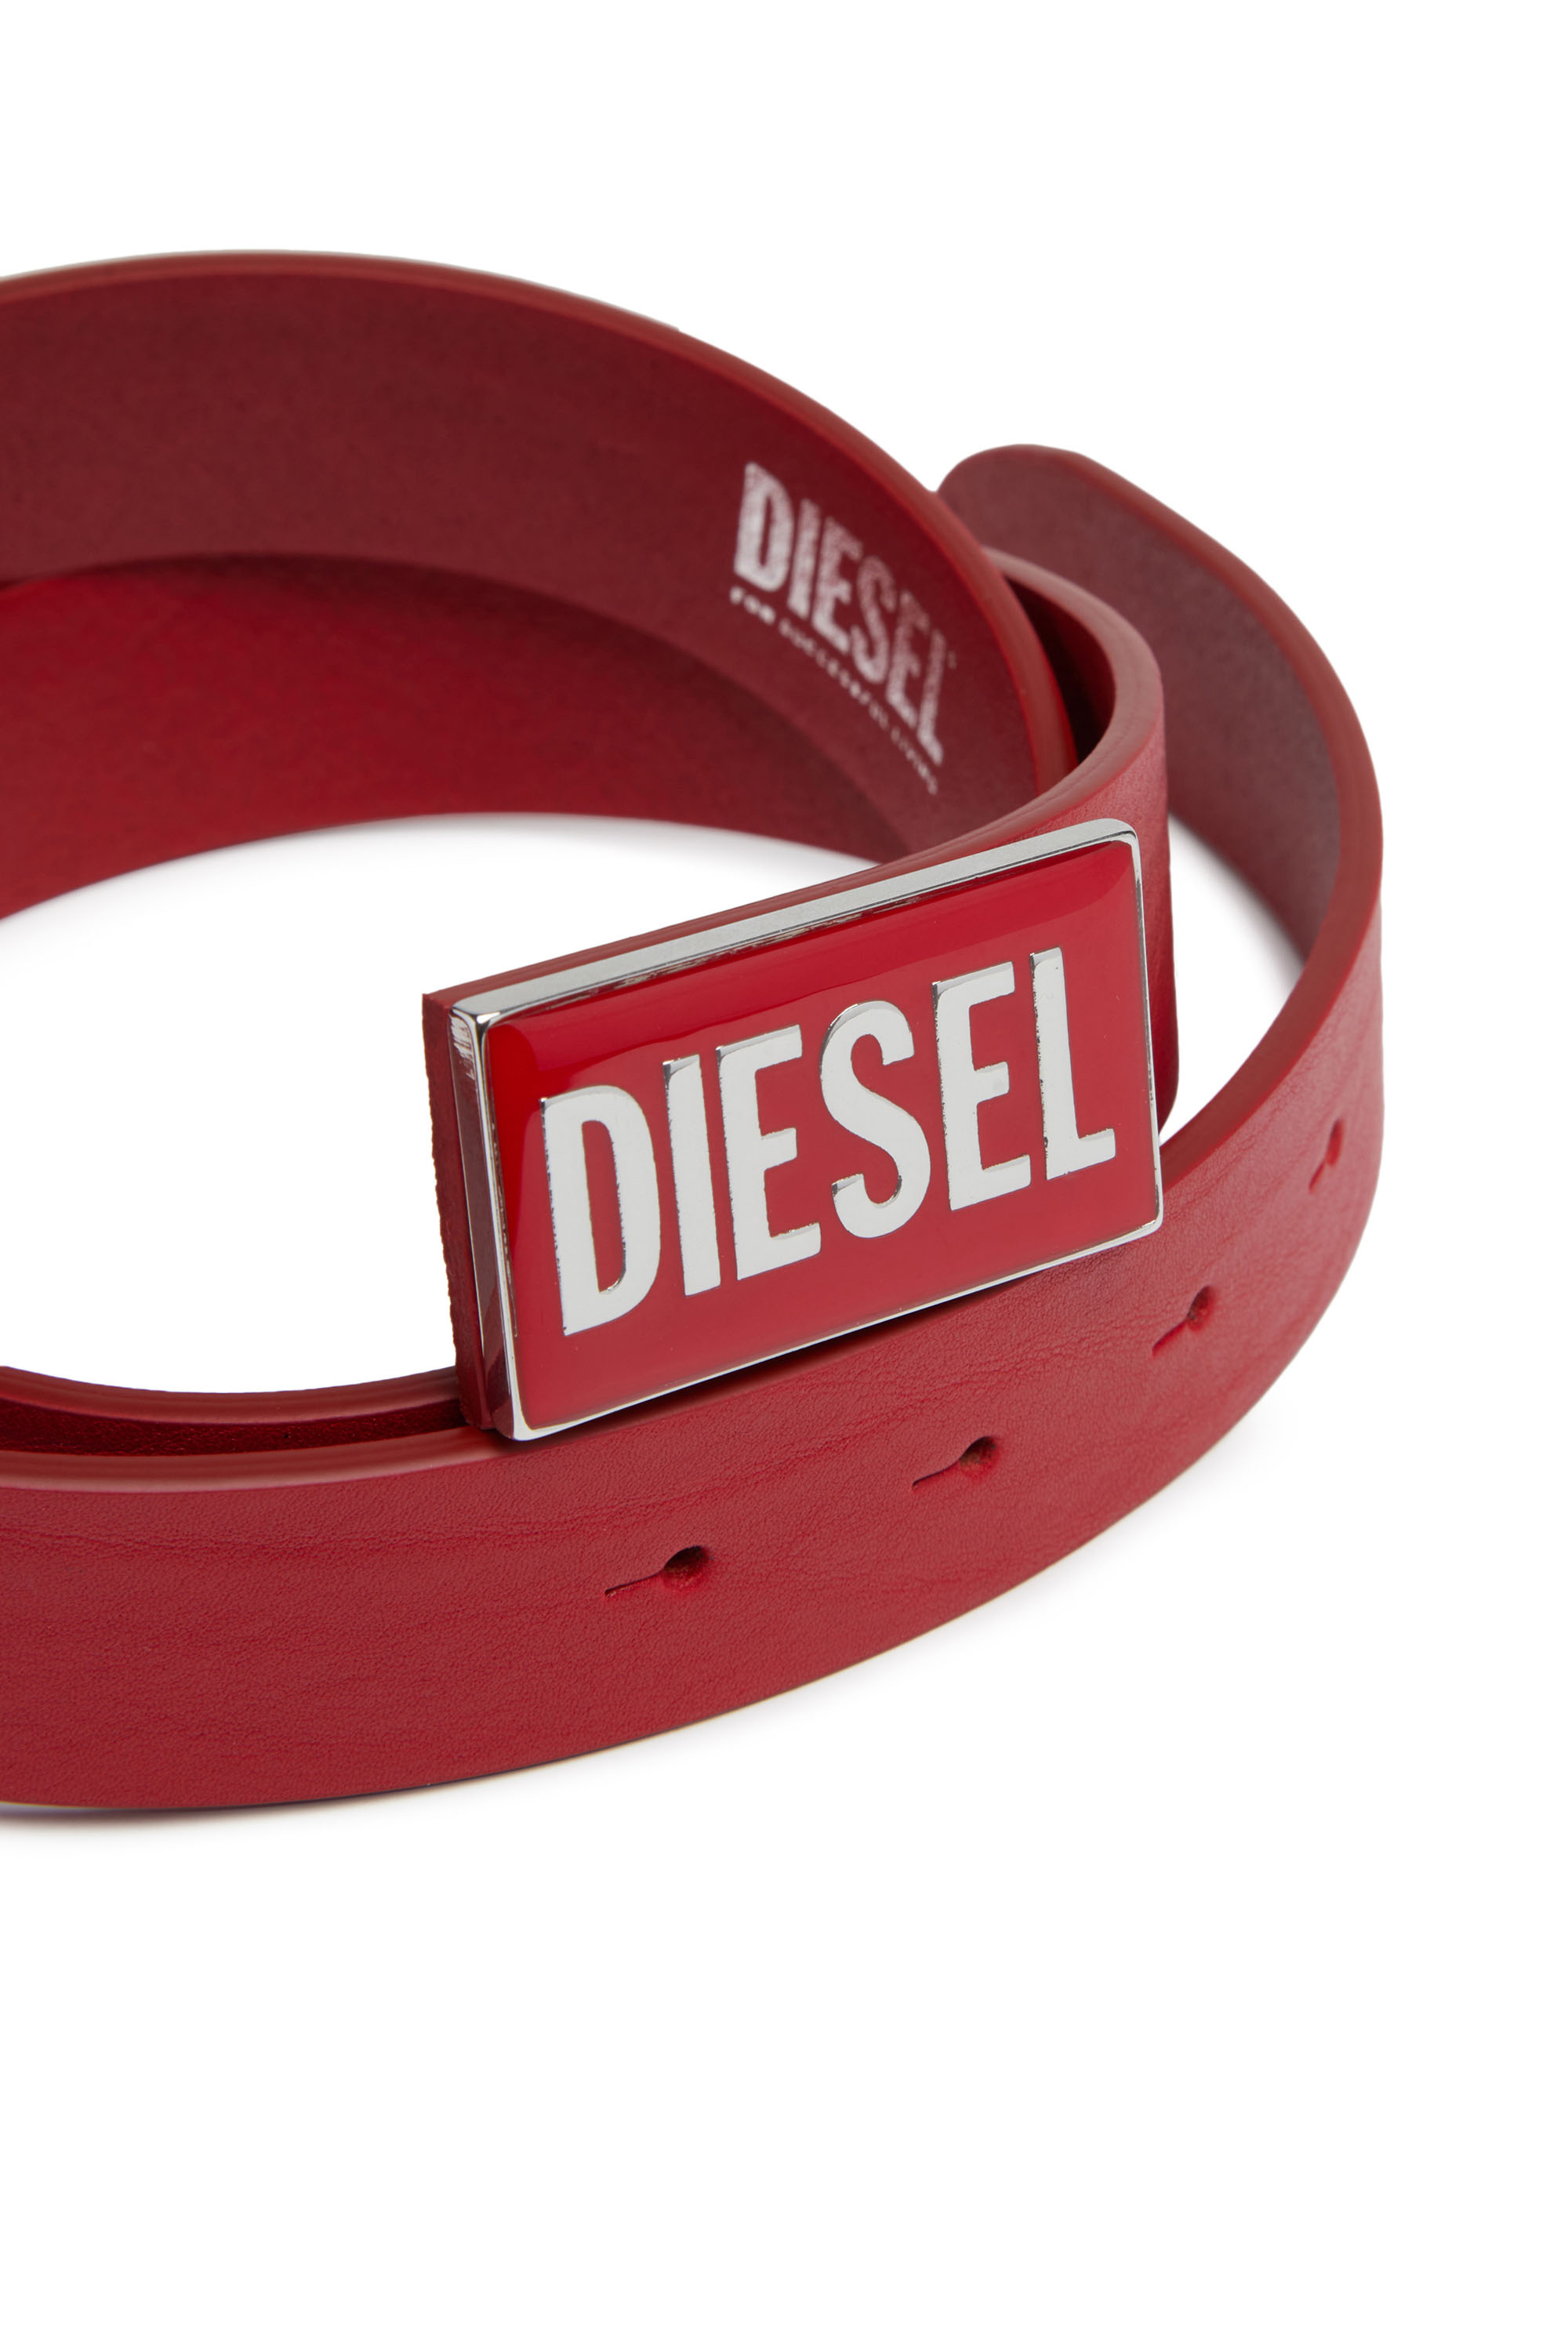 Diesel - B-GLOSSY, レッド - Image 3